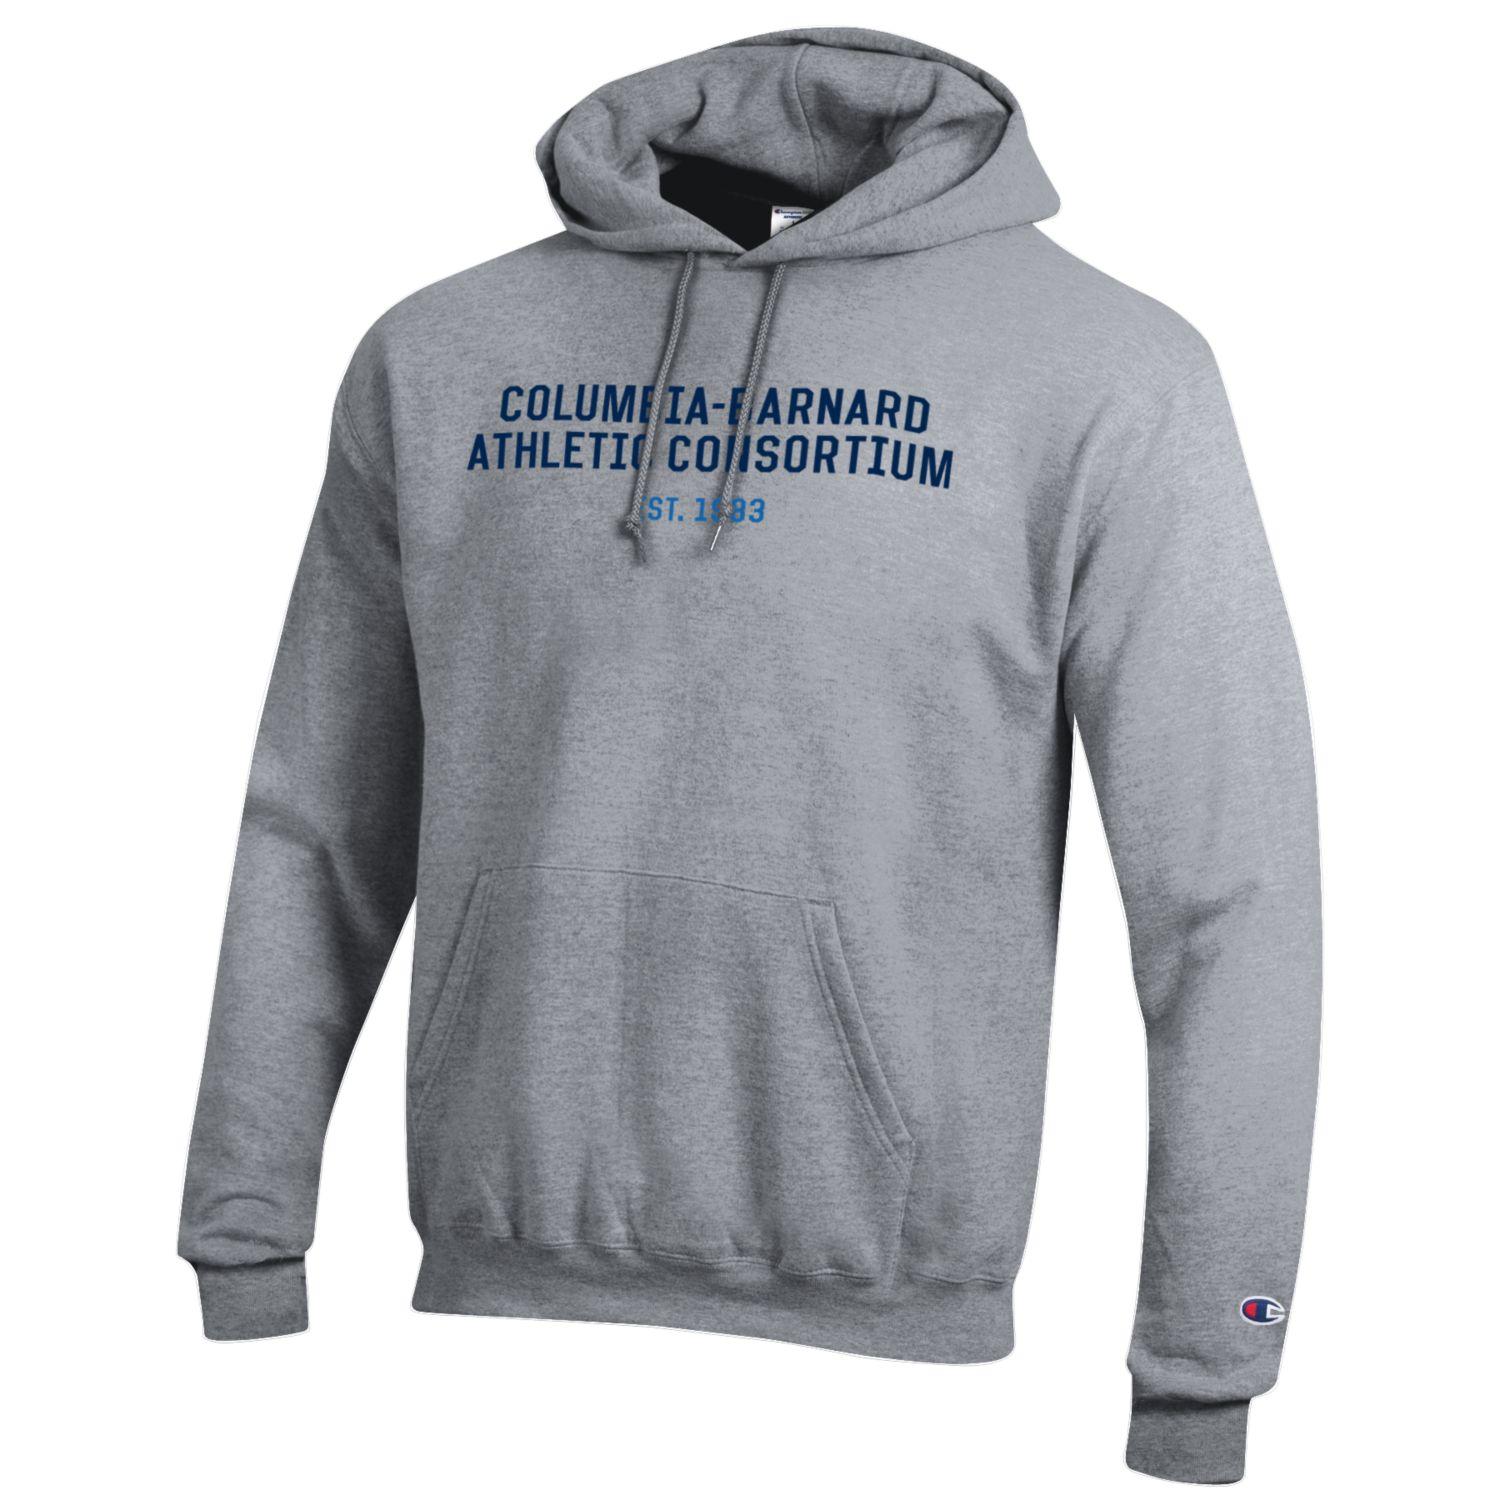 Columbia-Barnard Athletic Consortium Hoodie – The Barnard Store